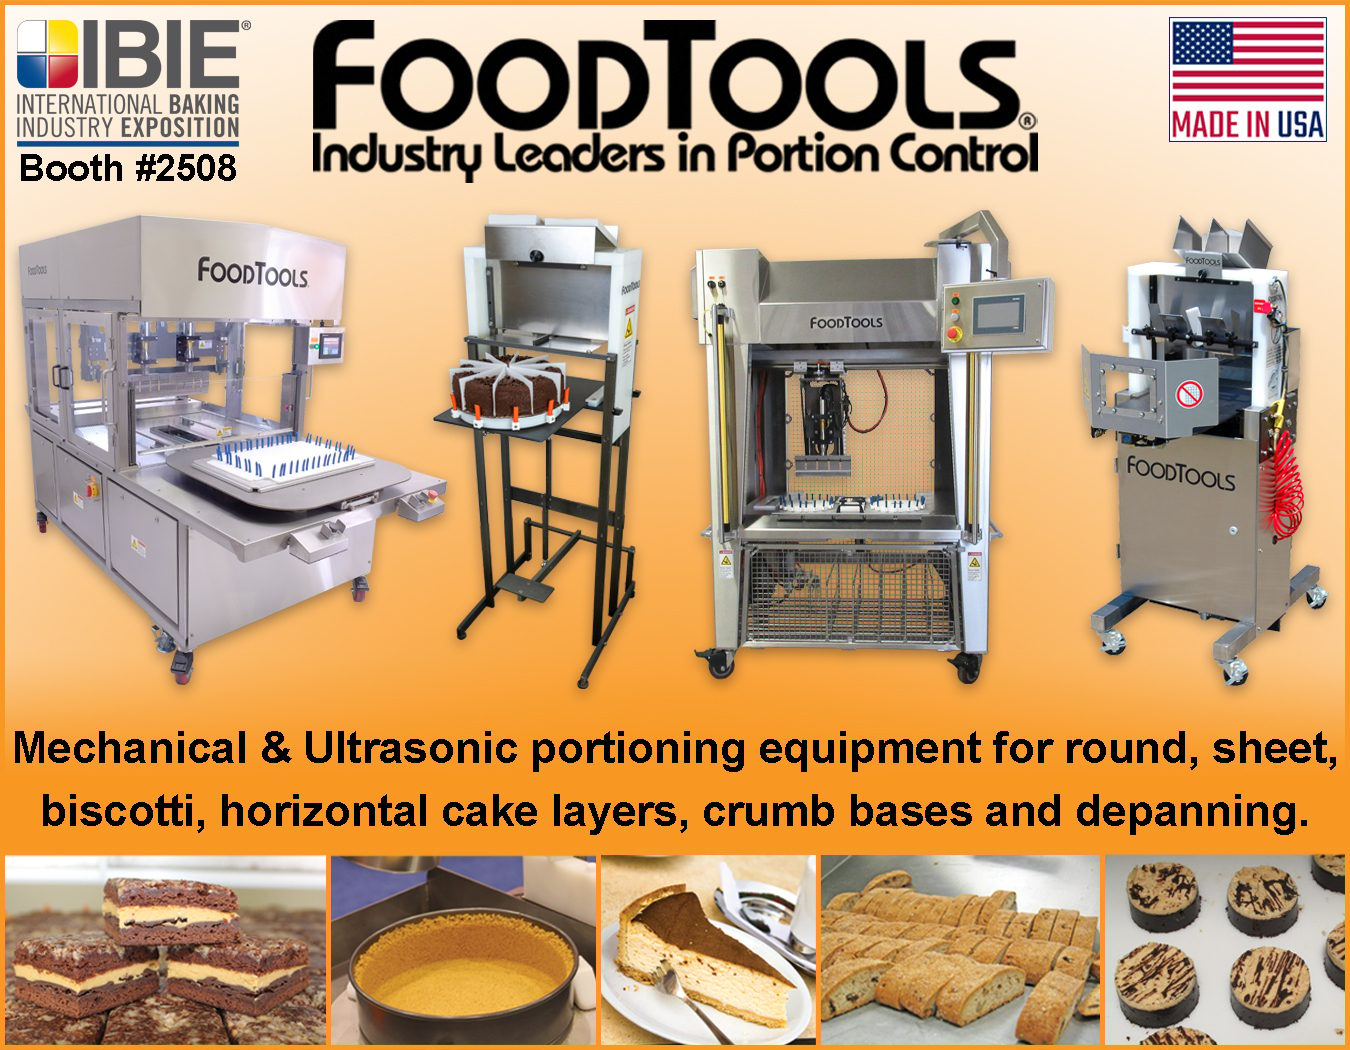 Advertisement, Orange background, Photos of baked goods, Equipment lines